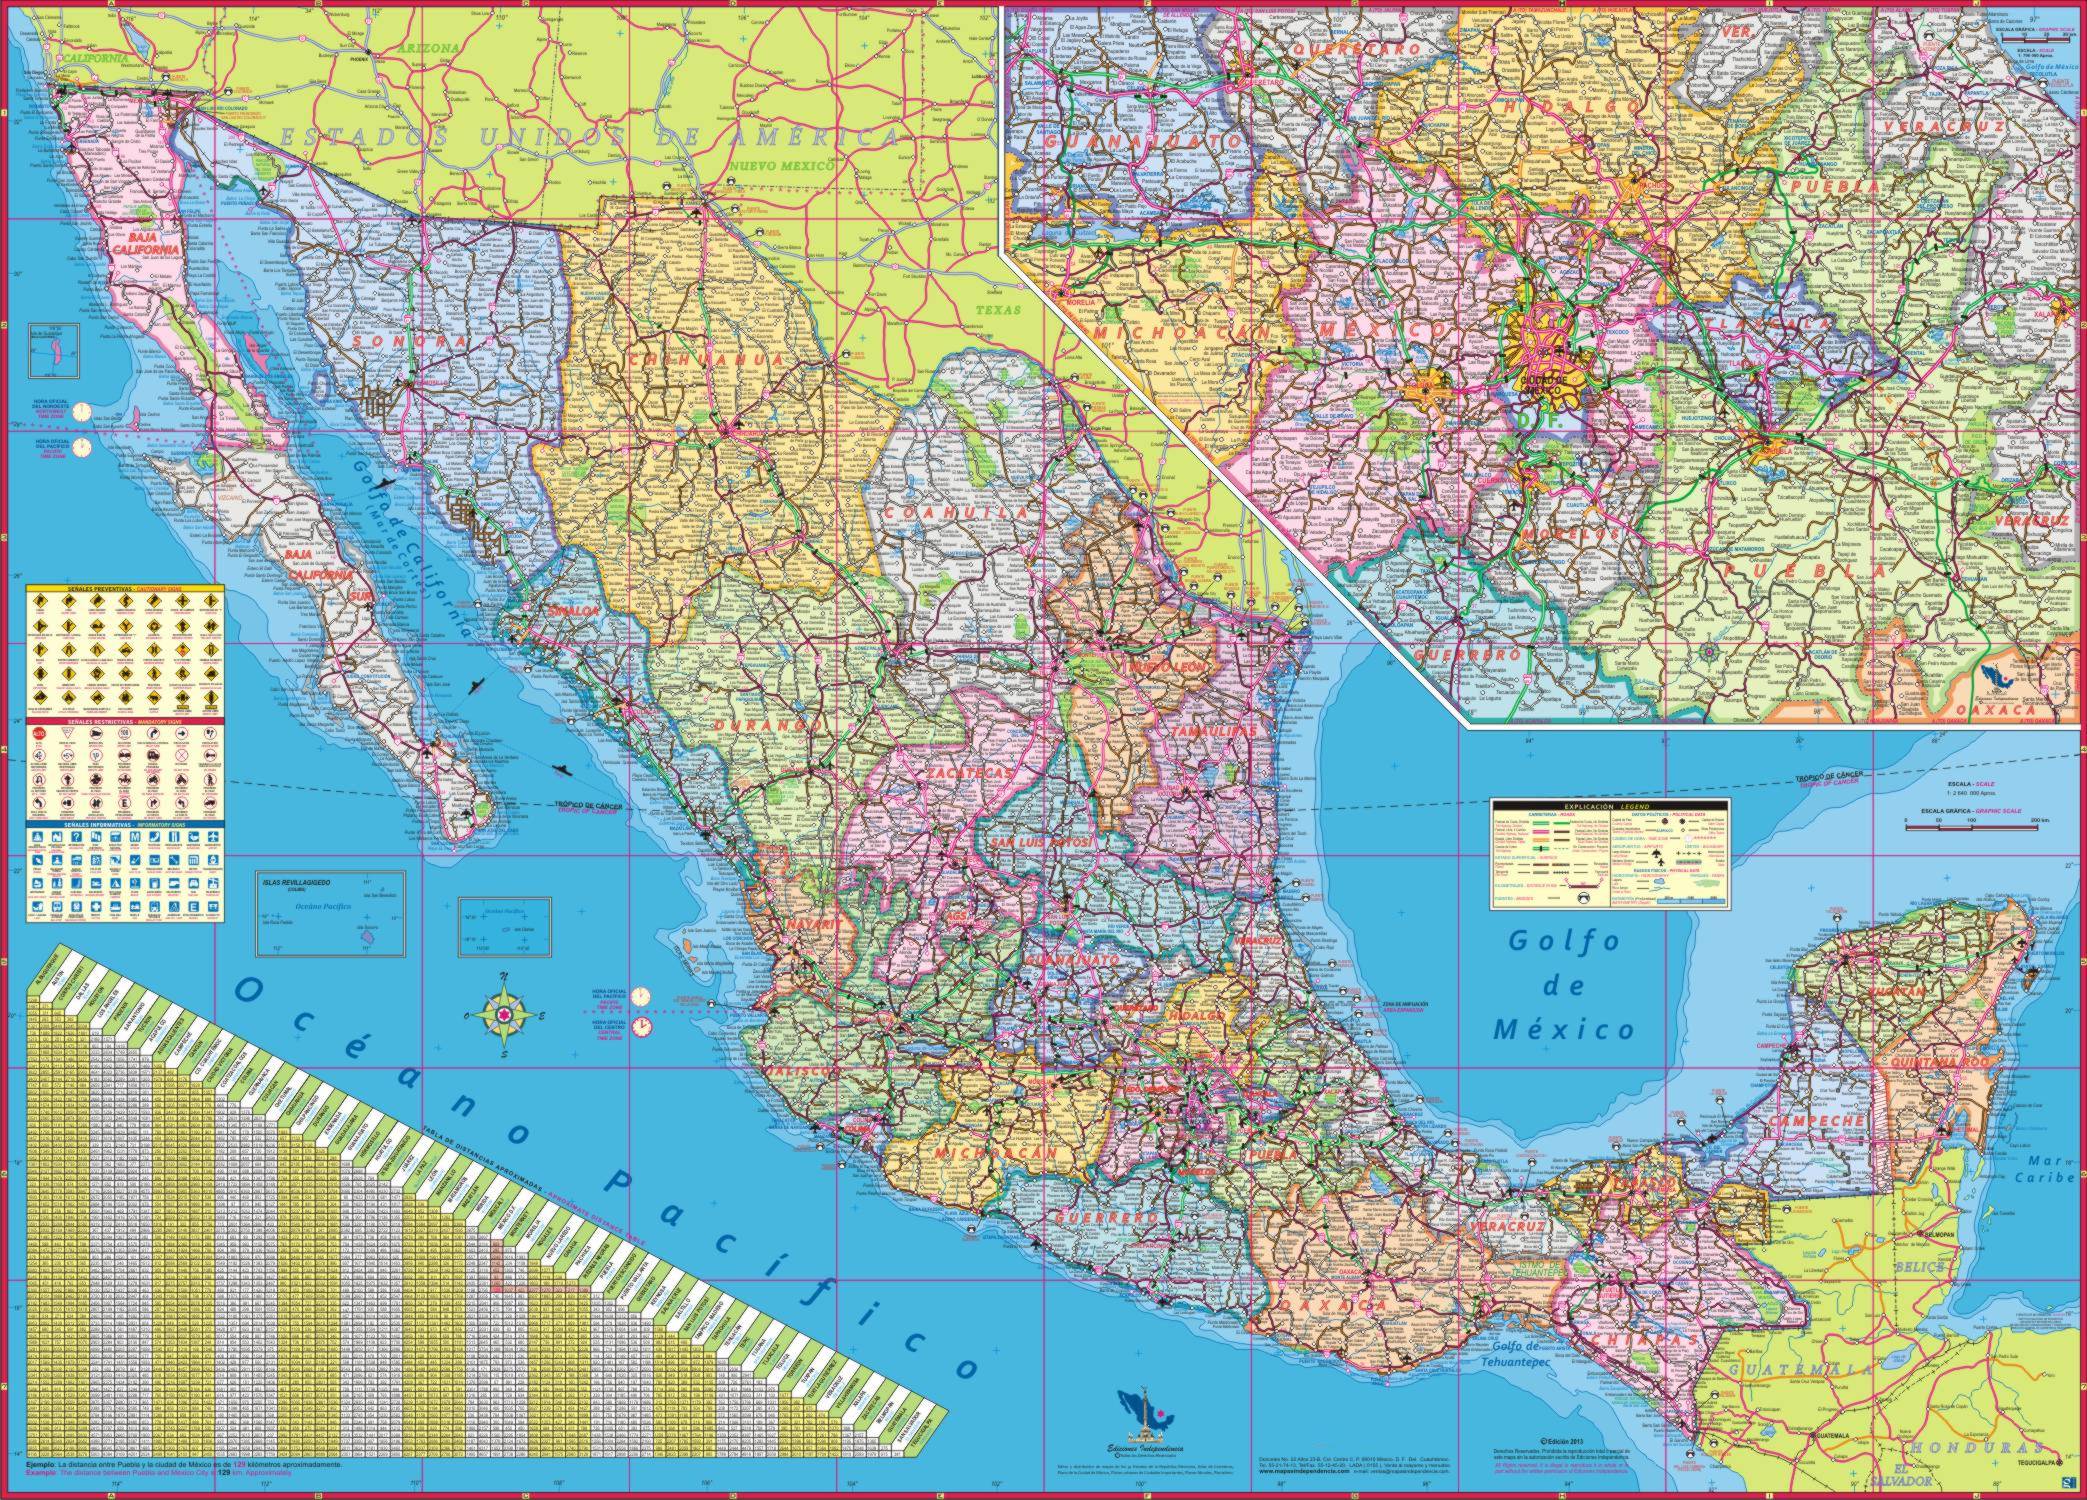 Republica-Mexicana-90x125-cm.jpg